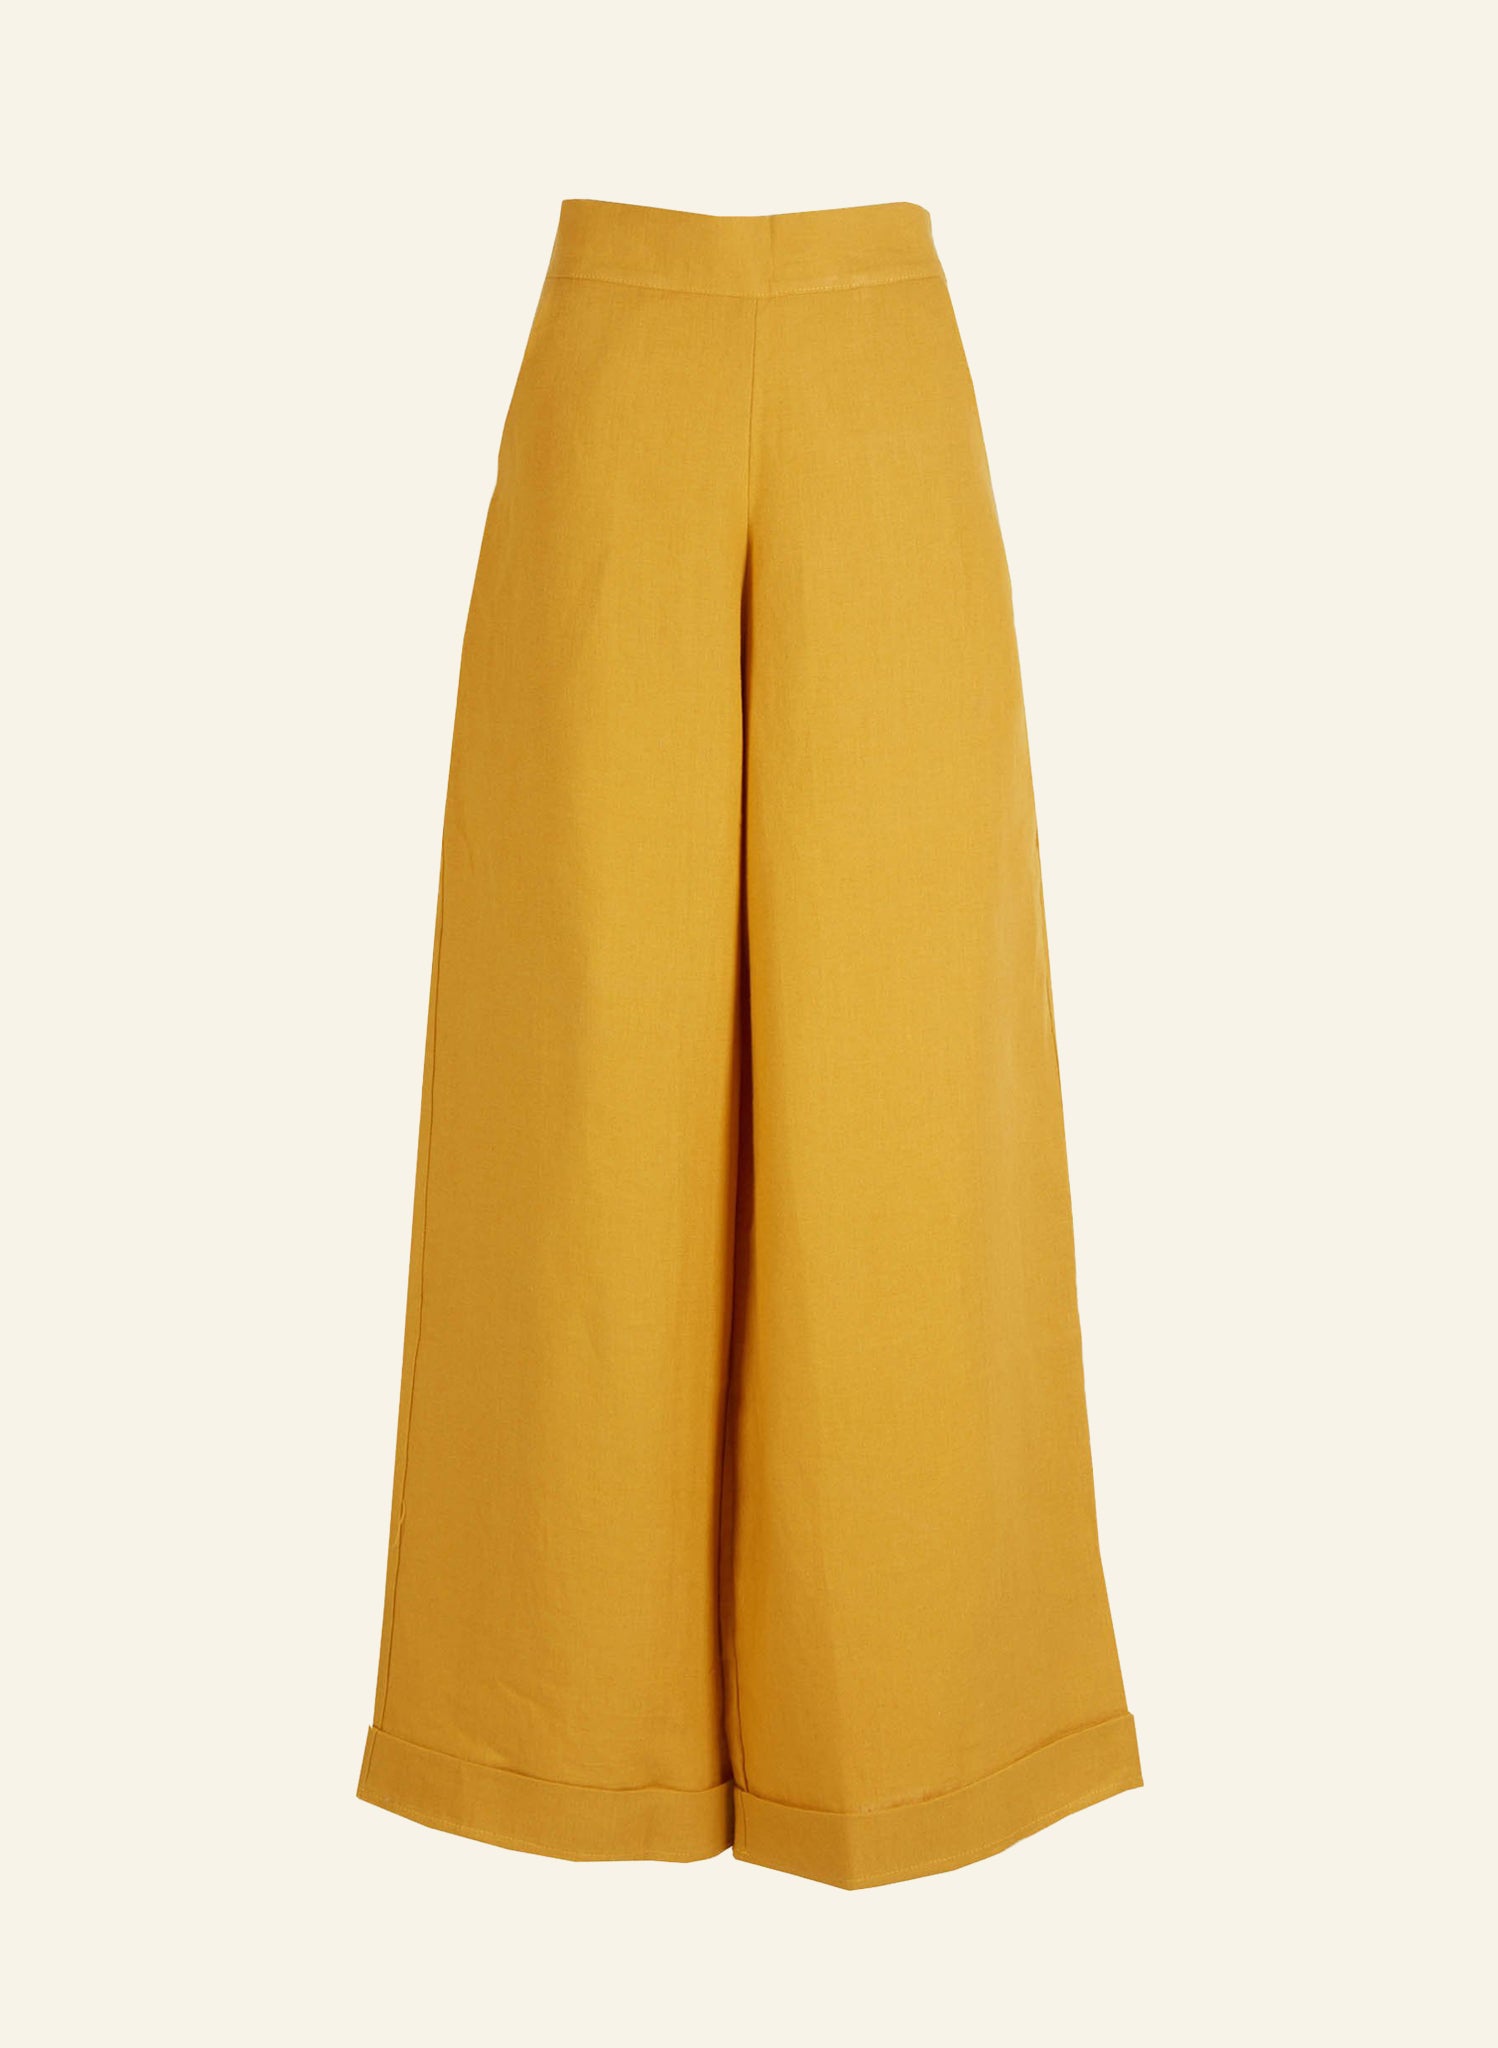 Josephine - Mustard Linen Trousers